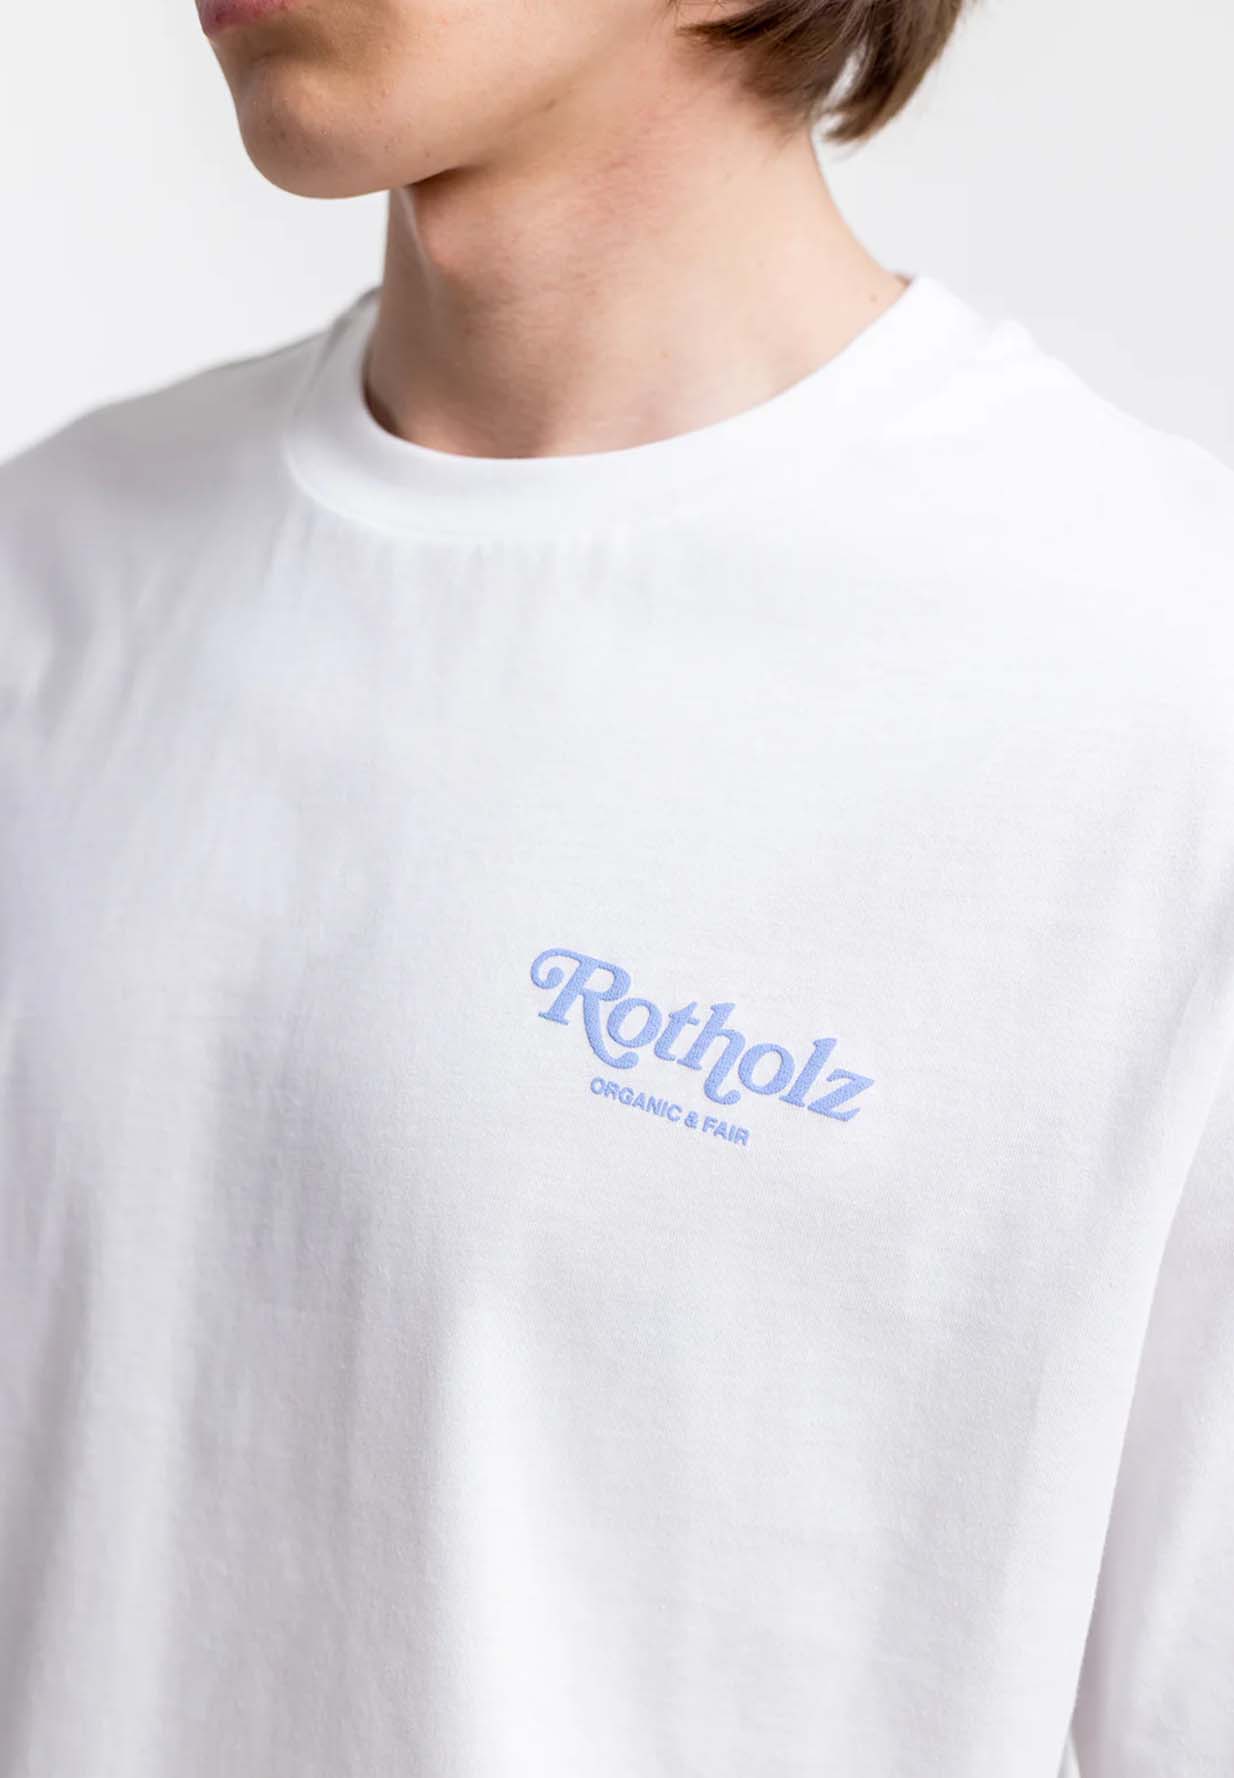 ROTHOLZ Retro Logo T-Shirt white L